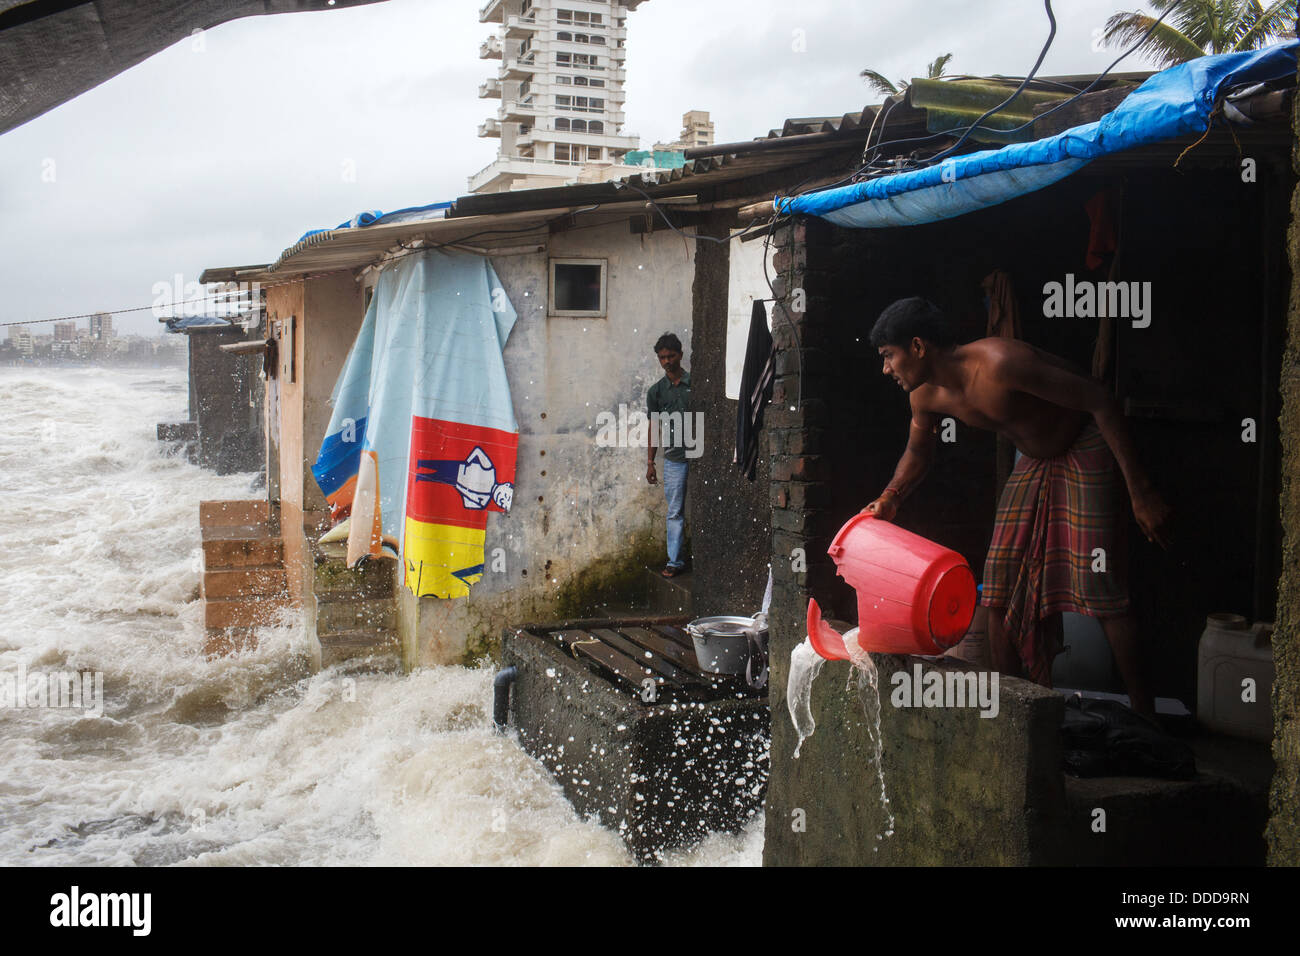 A monsoon storm flooding a small village community by the sea in Bandra, Mumbai, India. Stock Photo